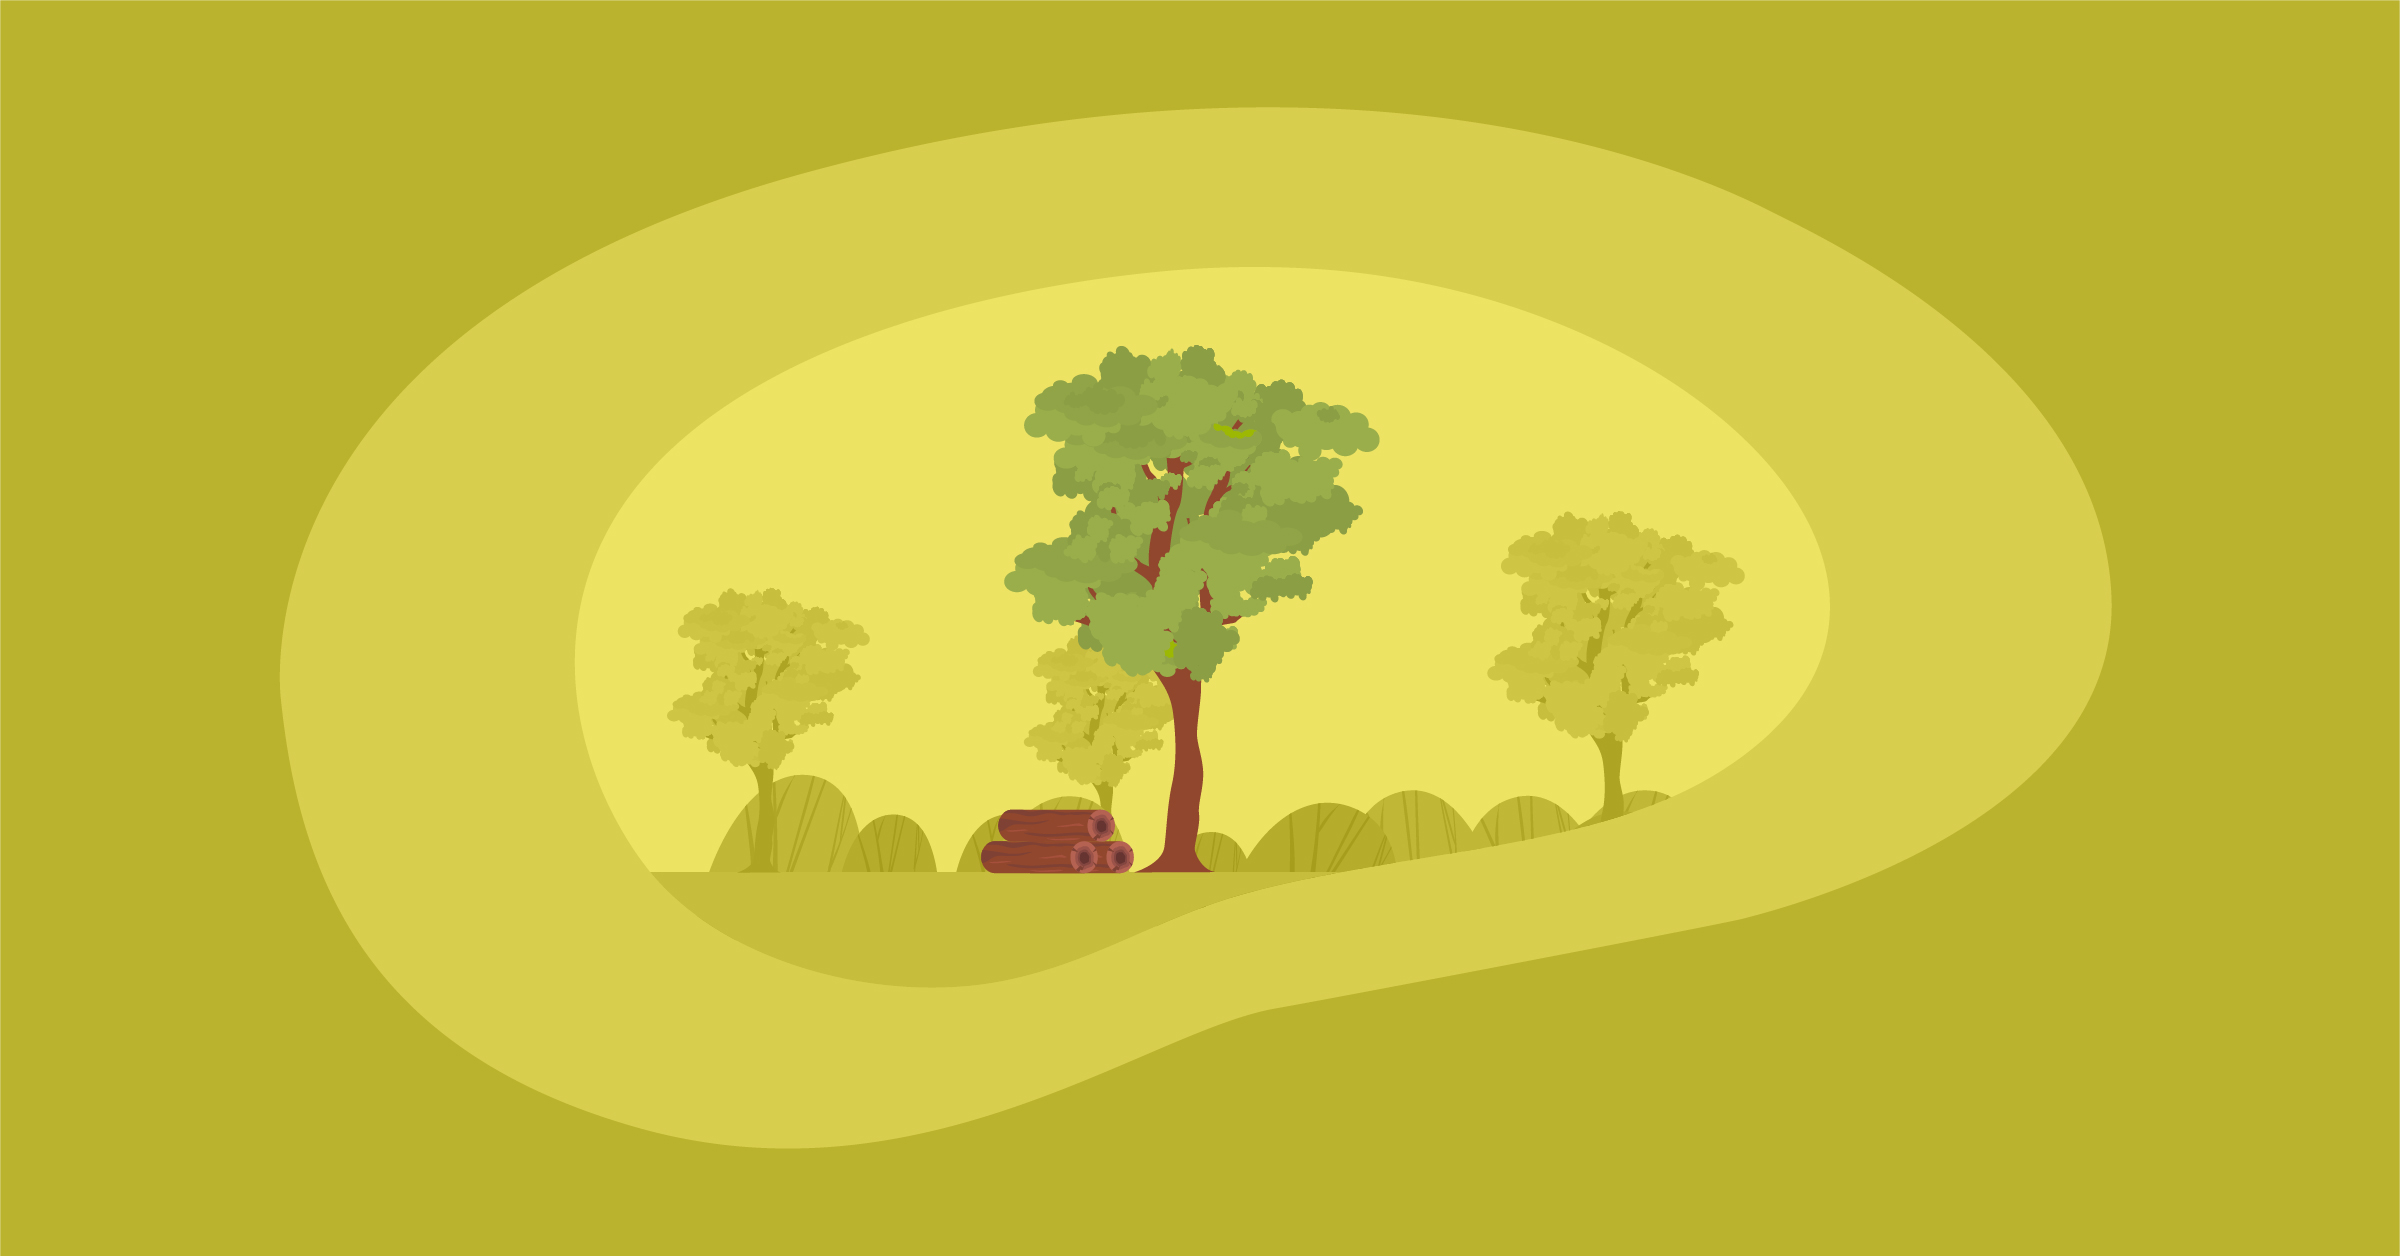 Illustration of a meranti tree and wood